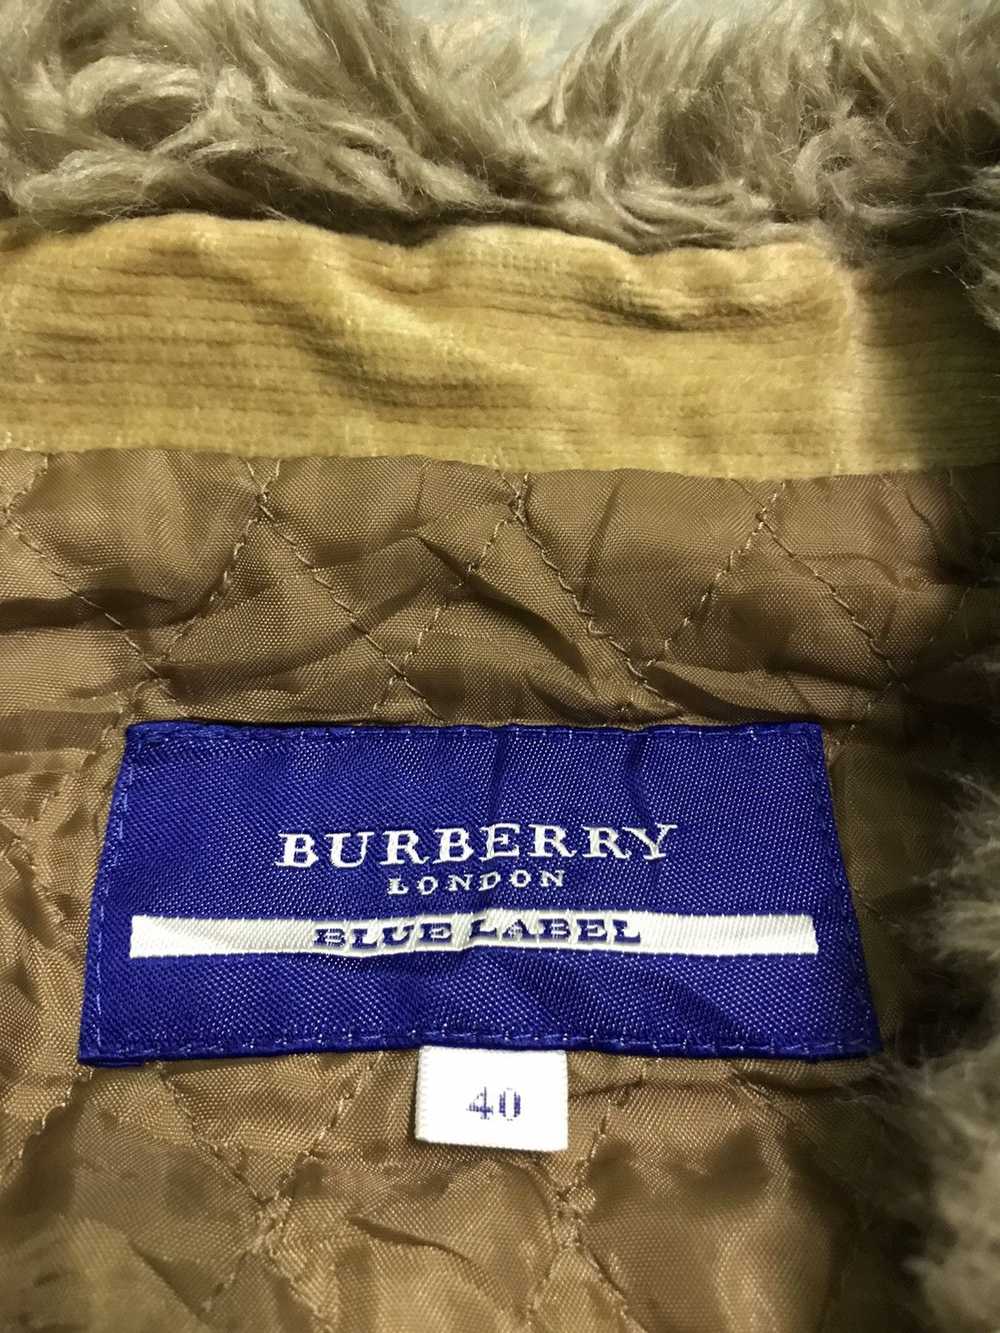 Burberry Burberry blue label jacket - image 2